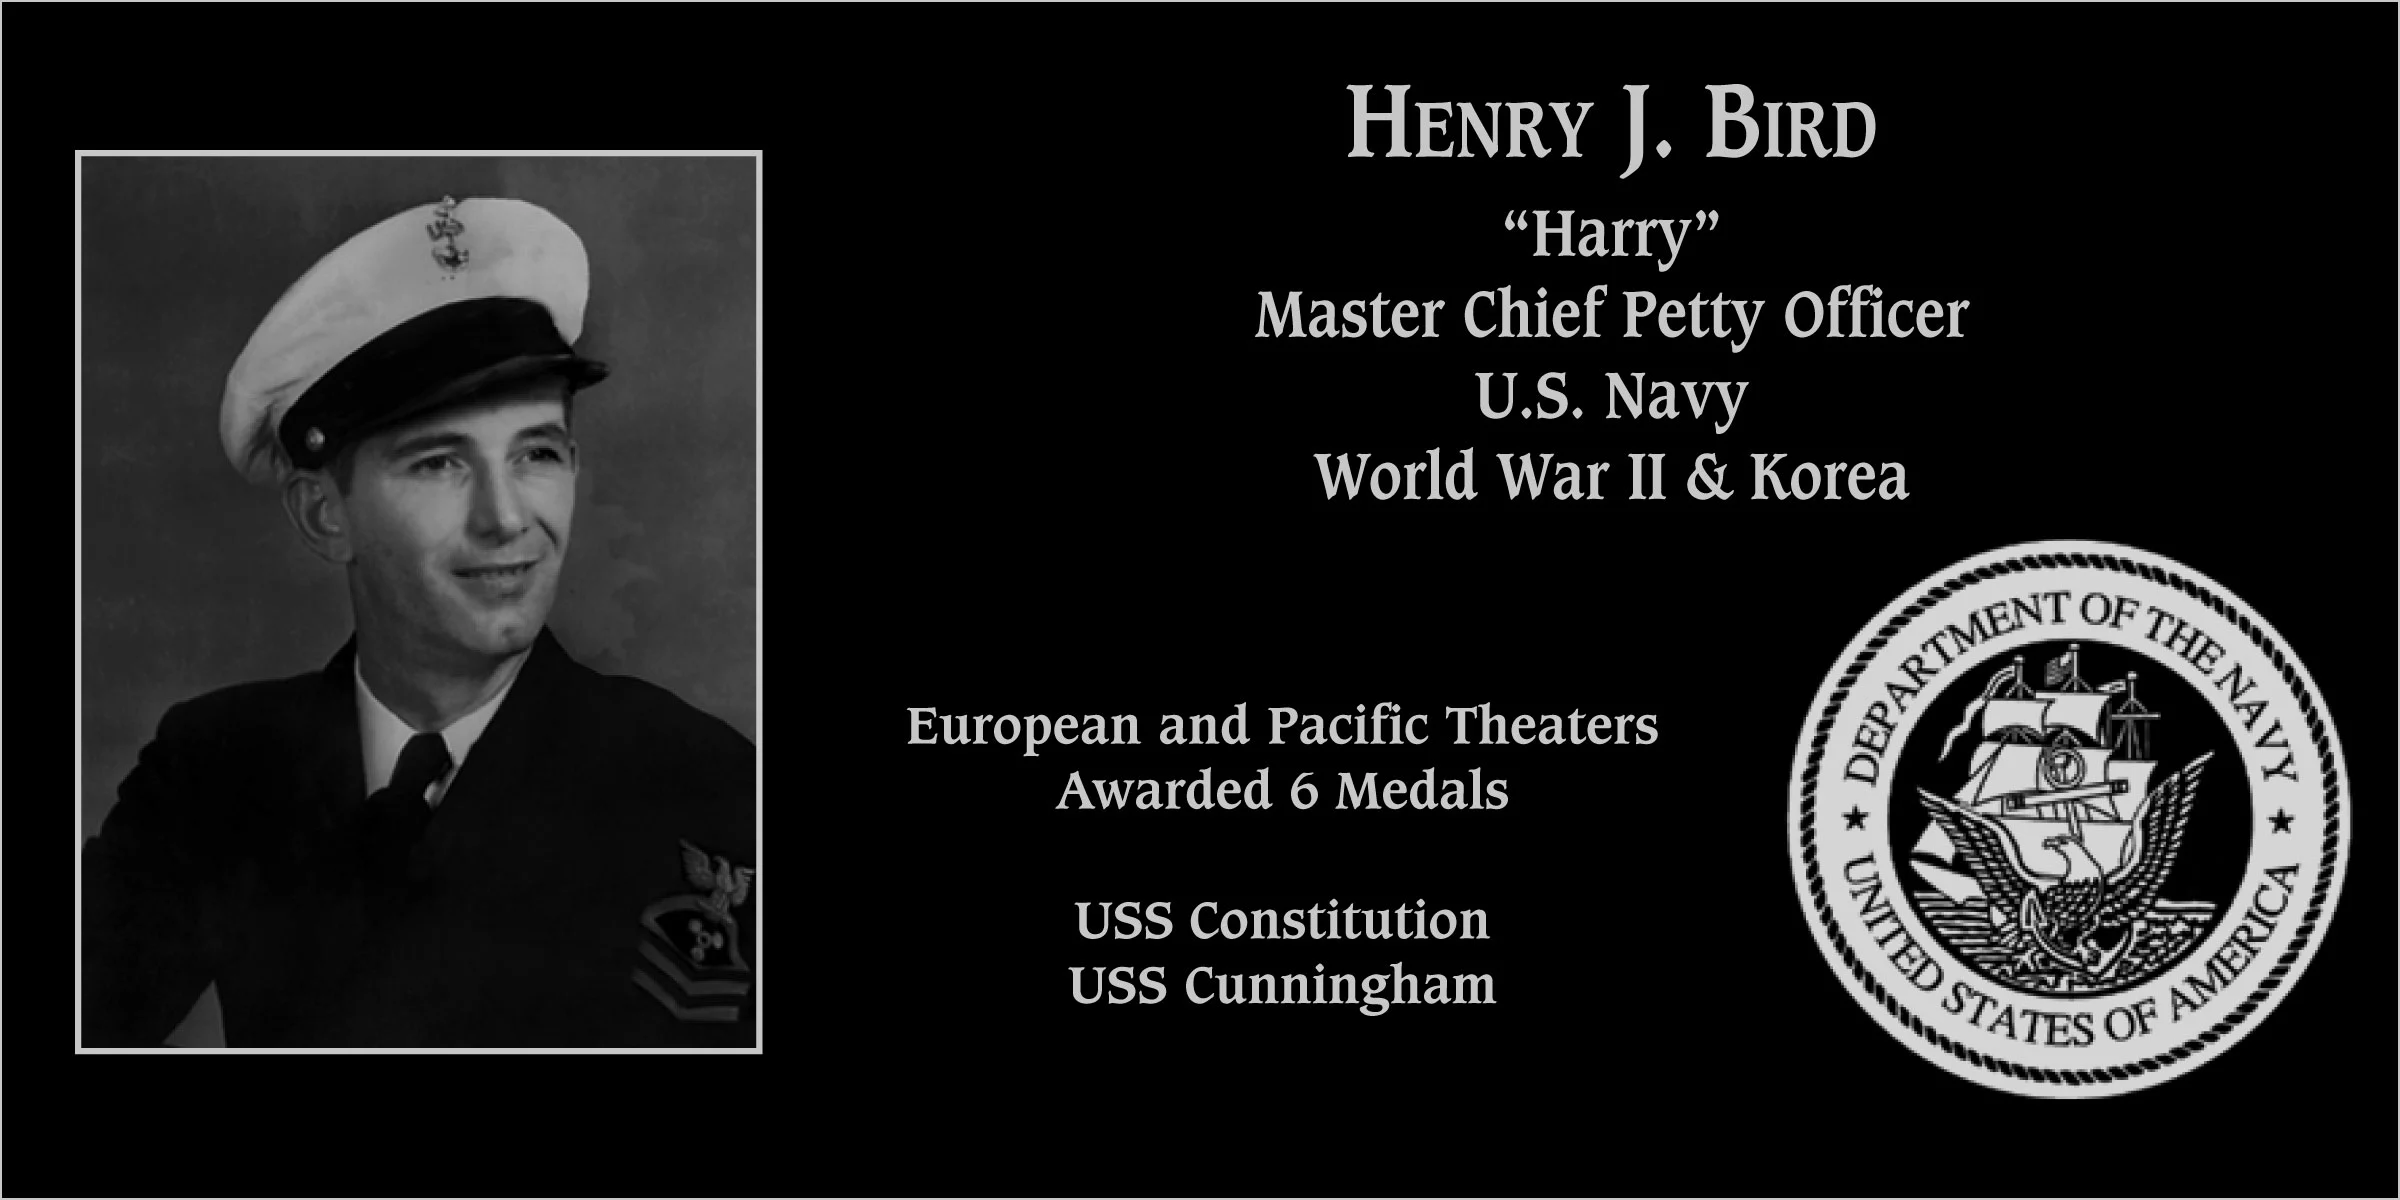 Henry J. Bird